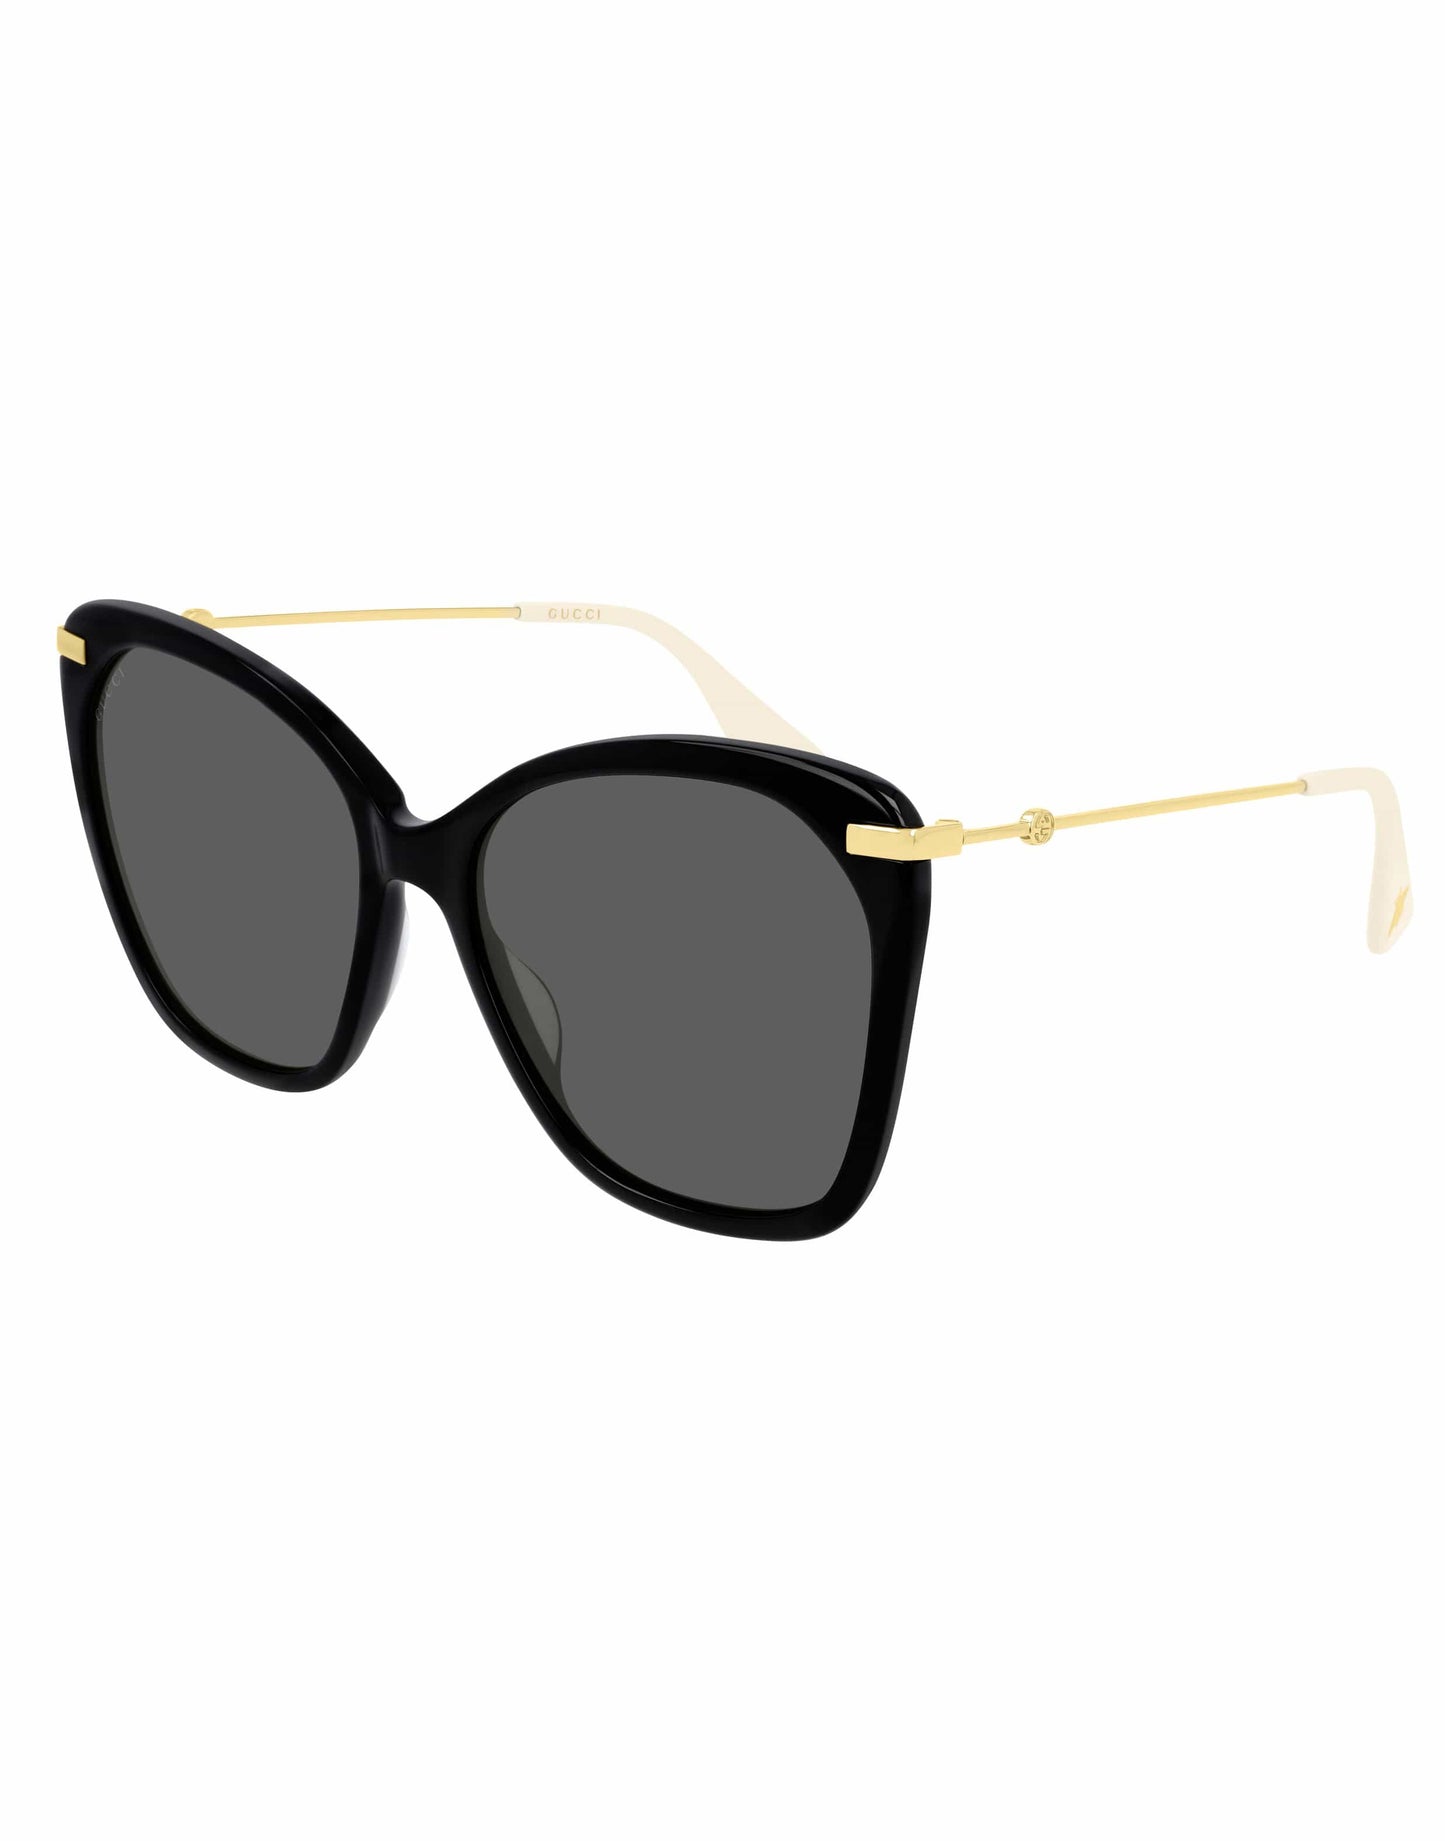 GUCCI-Black Butterfly Sunglasses - GG0510S-BLK/GLD